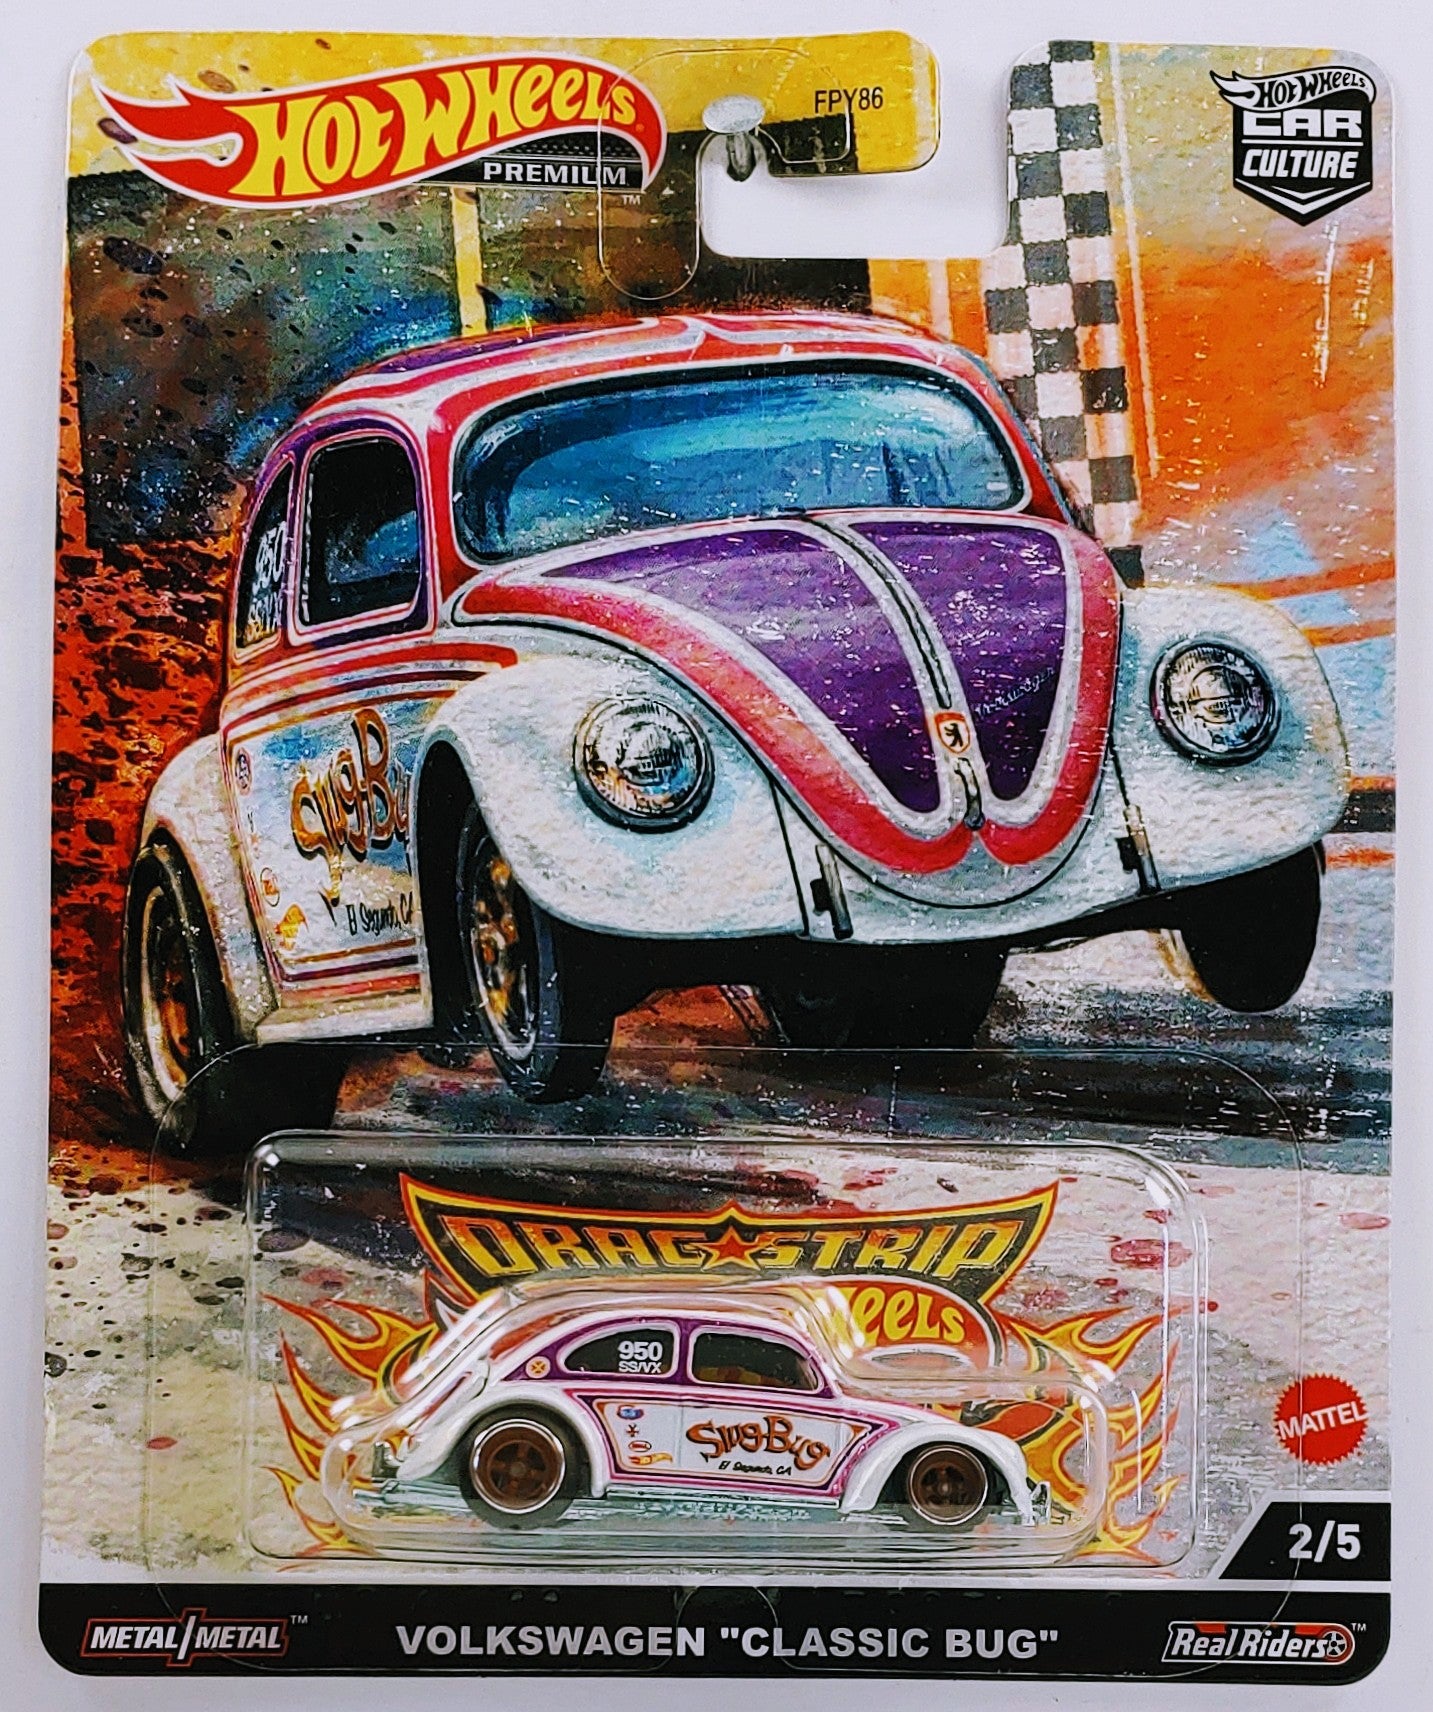 Hot Wheels 2022 - Premium / Car Culture / Drag Strip Demons 2/5 - Volkswagen "Classic Bug" - White / Slug Bug - Metal/Metal & Real Riders - Blister Card